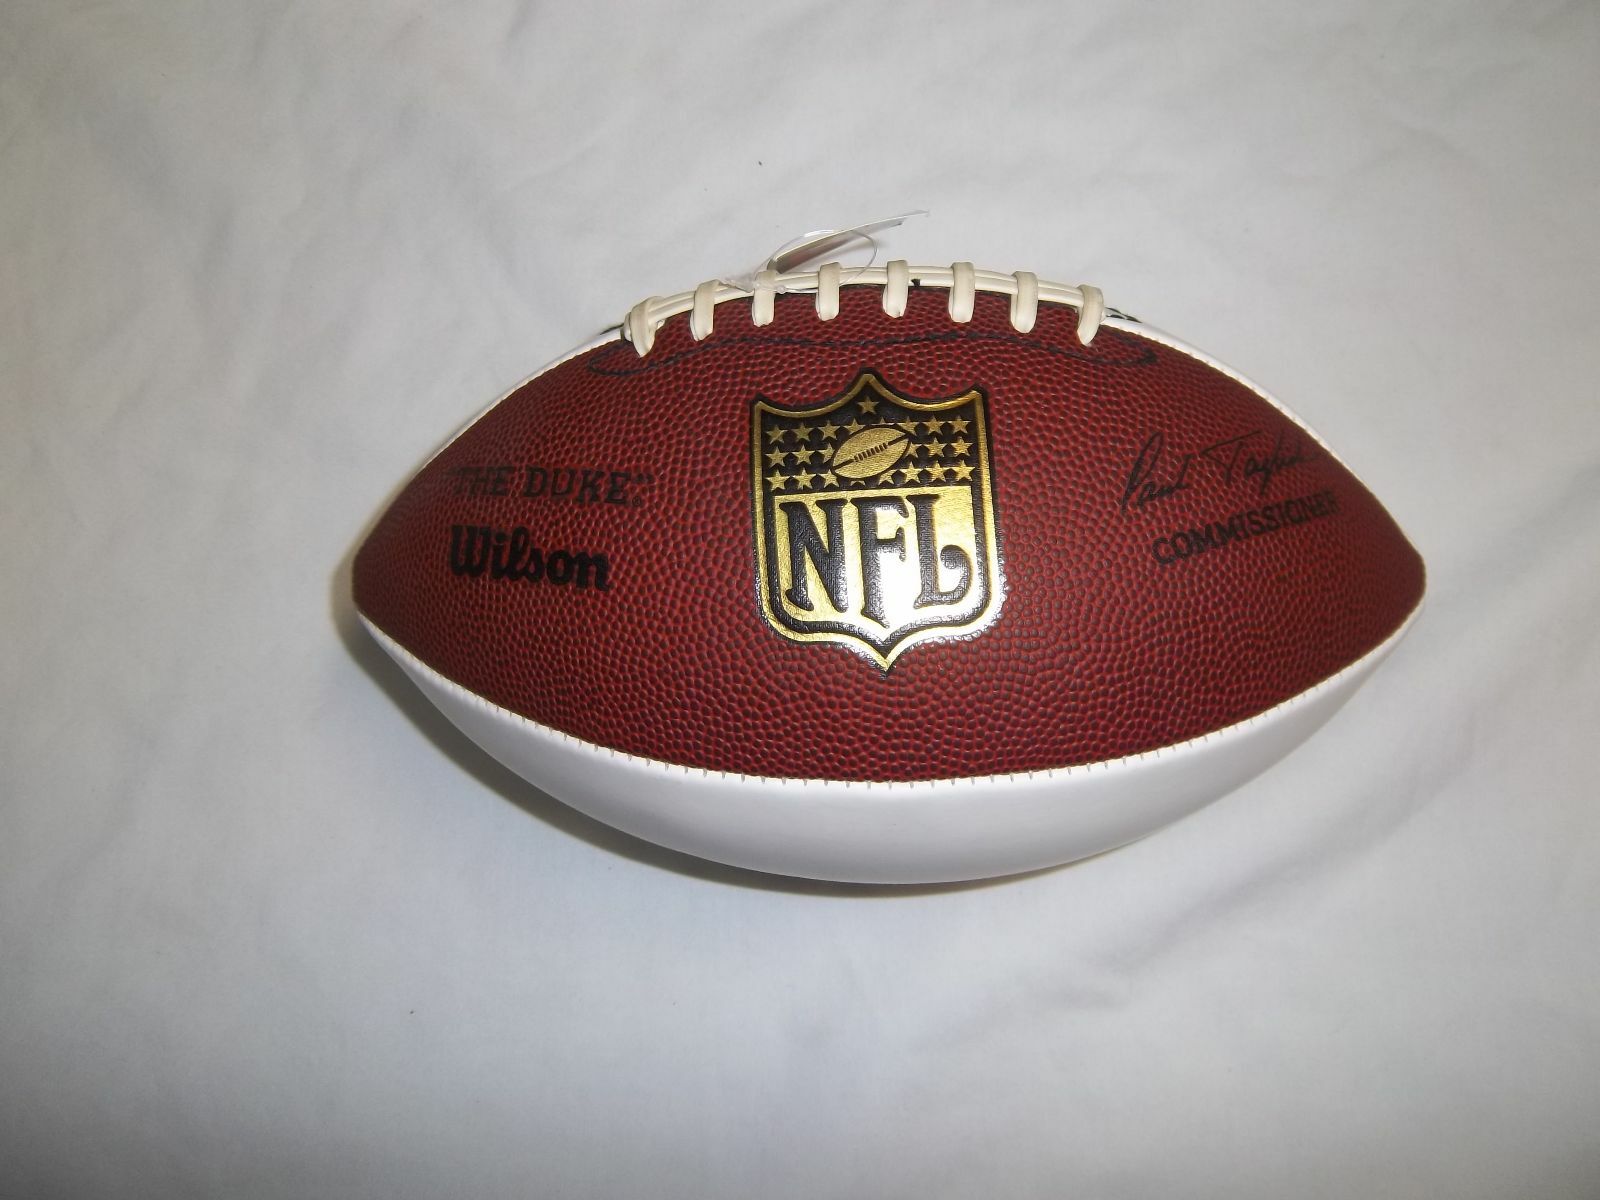 Wilson F1192 NFL Autograph Football(Replica signature of Paul Tagliabue )